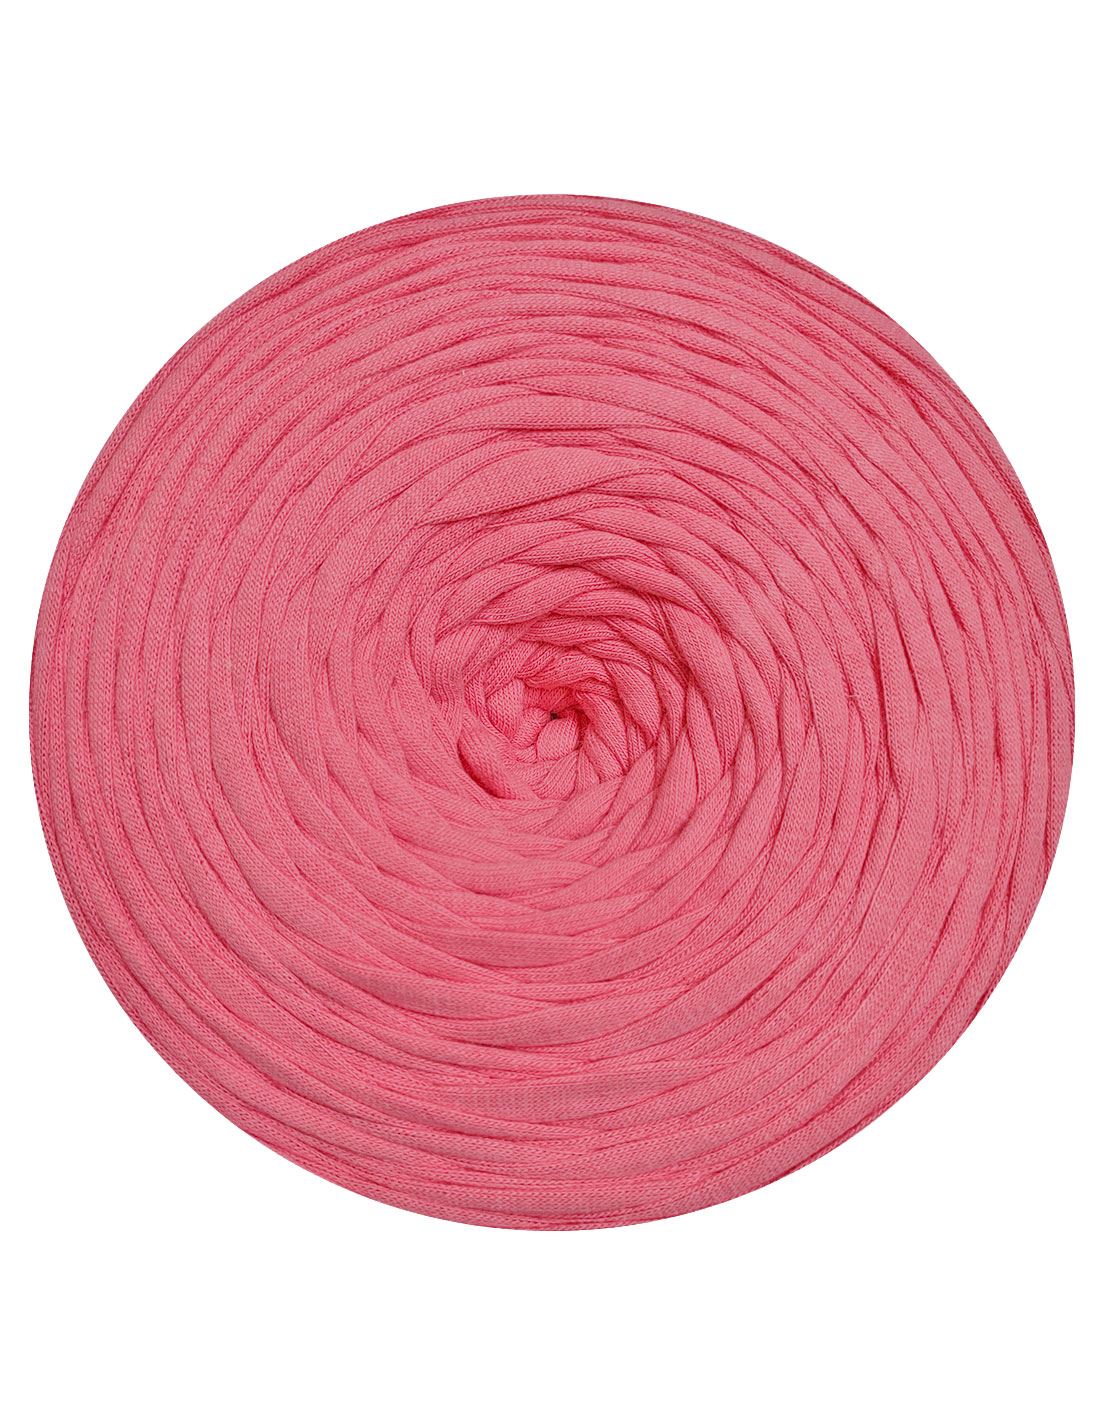 Rouge pink t-shirt yarn (100-120m)